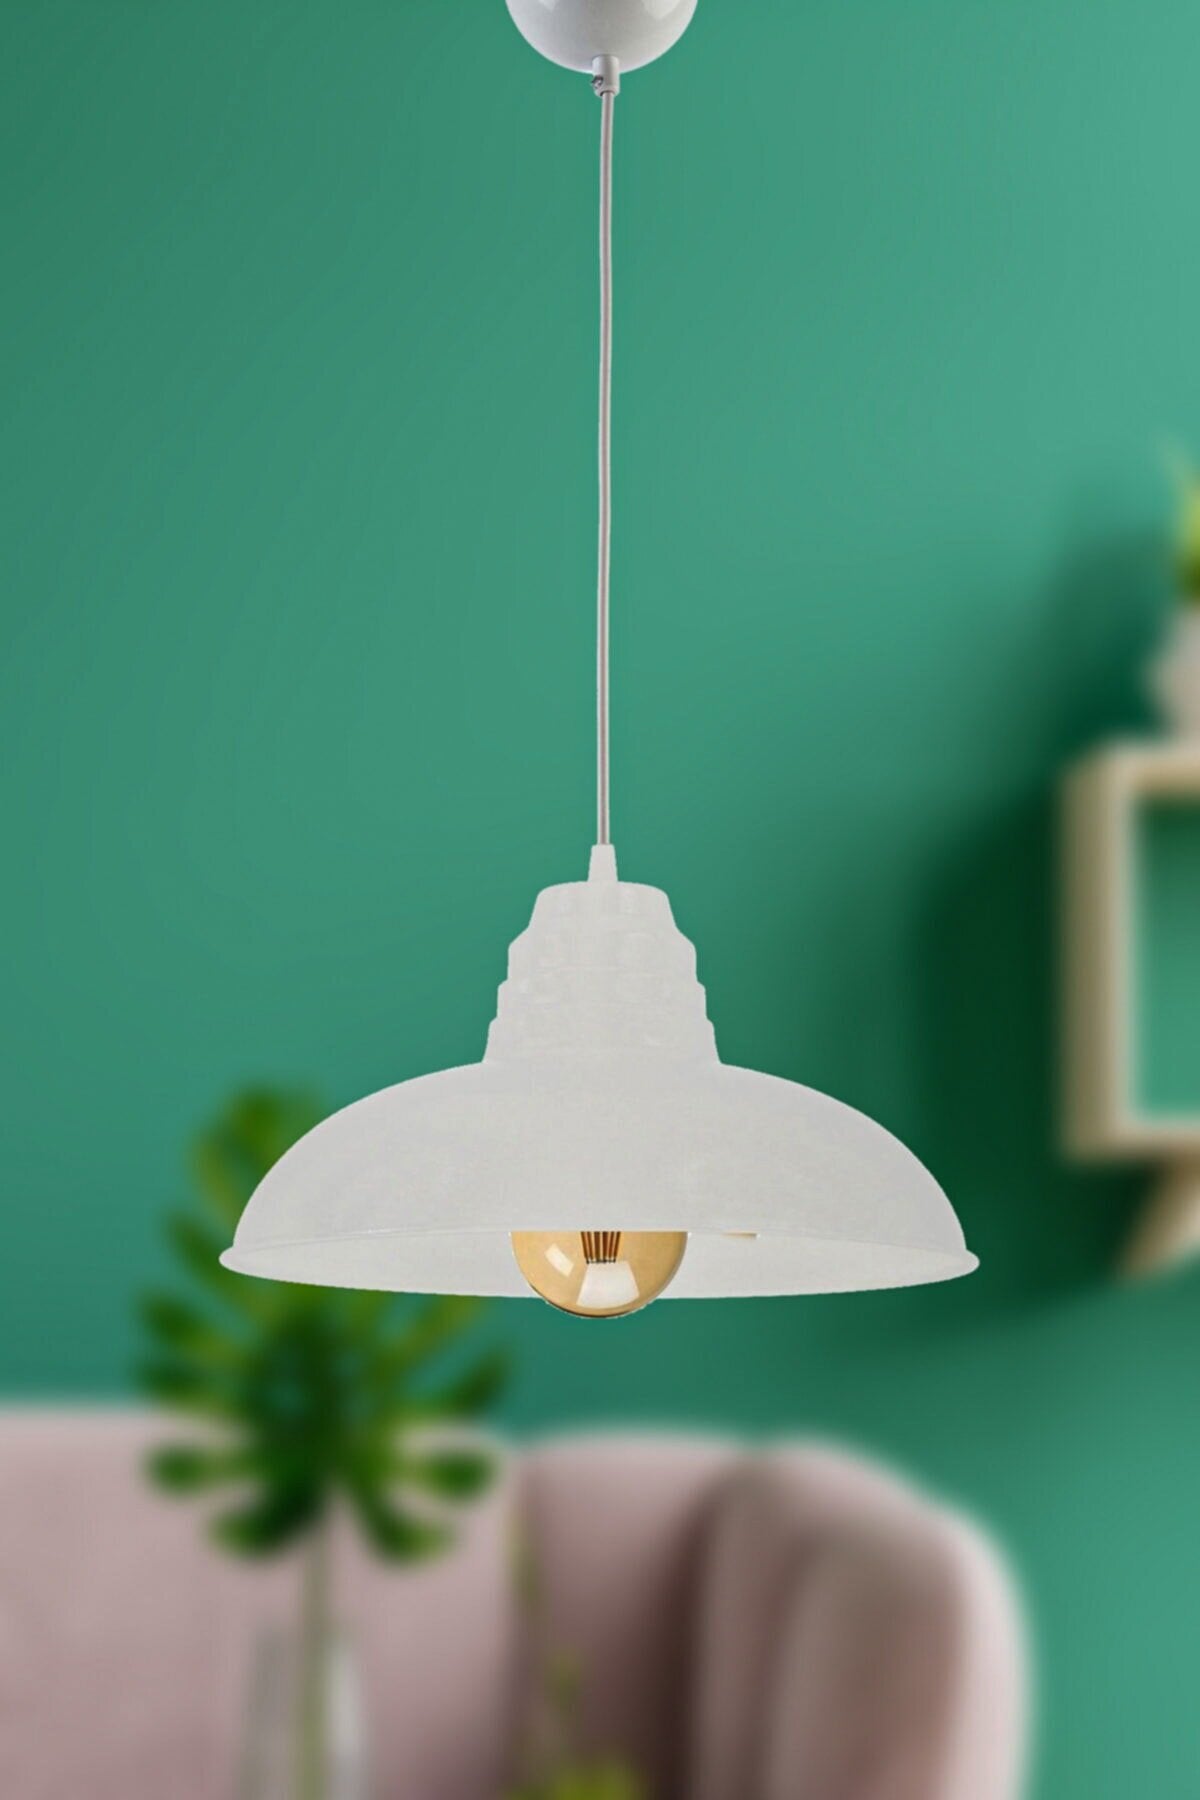 Sıdney Large (32 CM DIAMETER) Retro Rustic Model Modern Metal White Color Pendant Lamp Cafe - Kitchen Single Chandelier